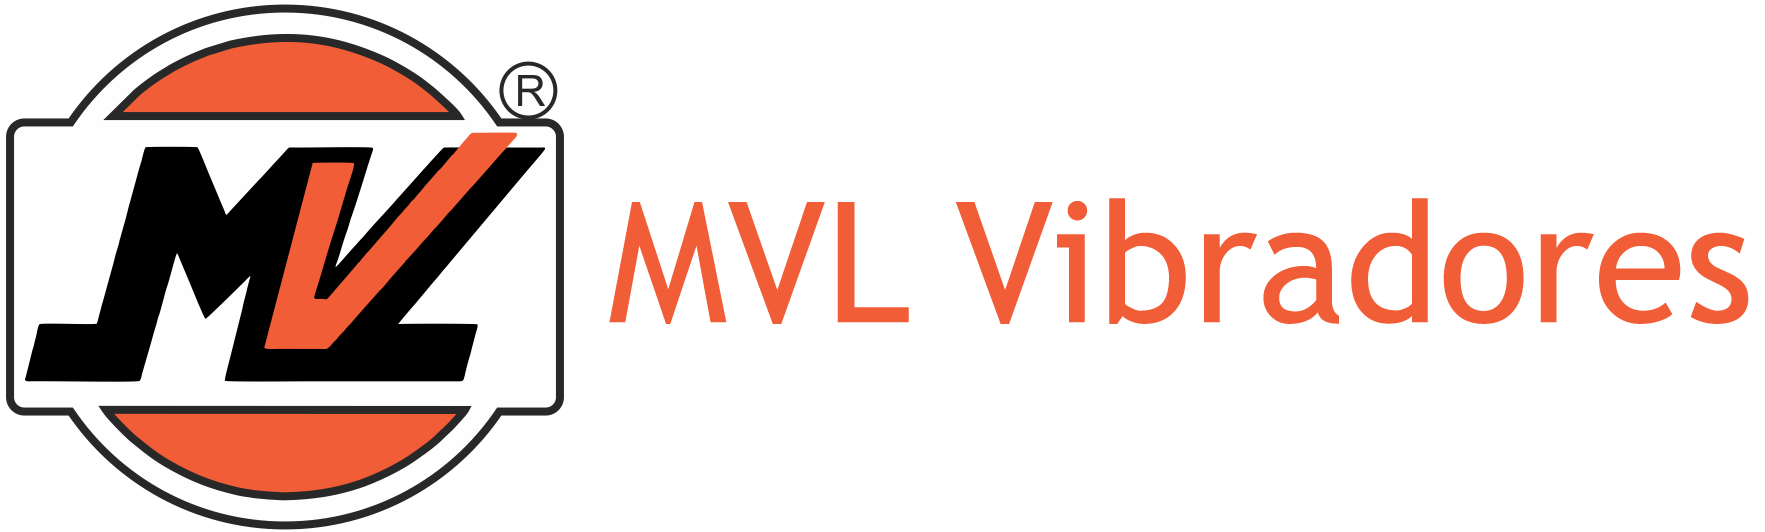 MVL Vibradores Industriais: 2 availações - Várzea Paulista, SP